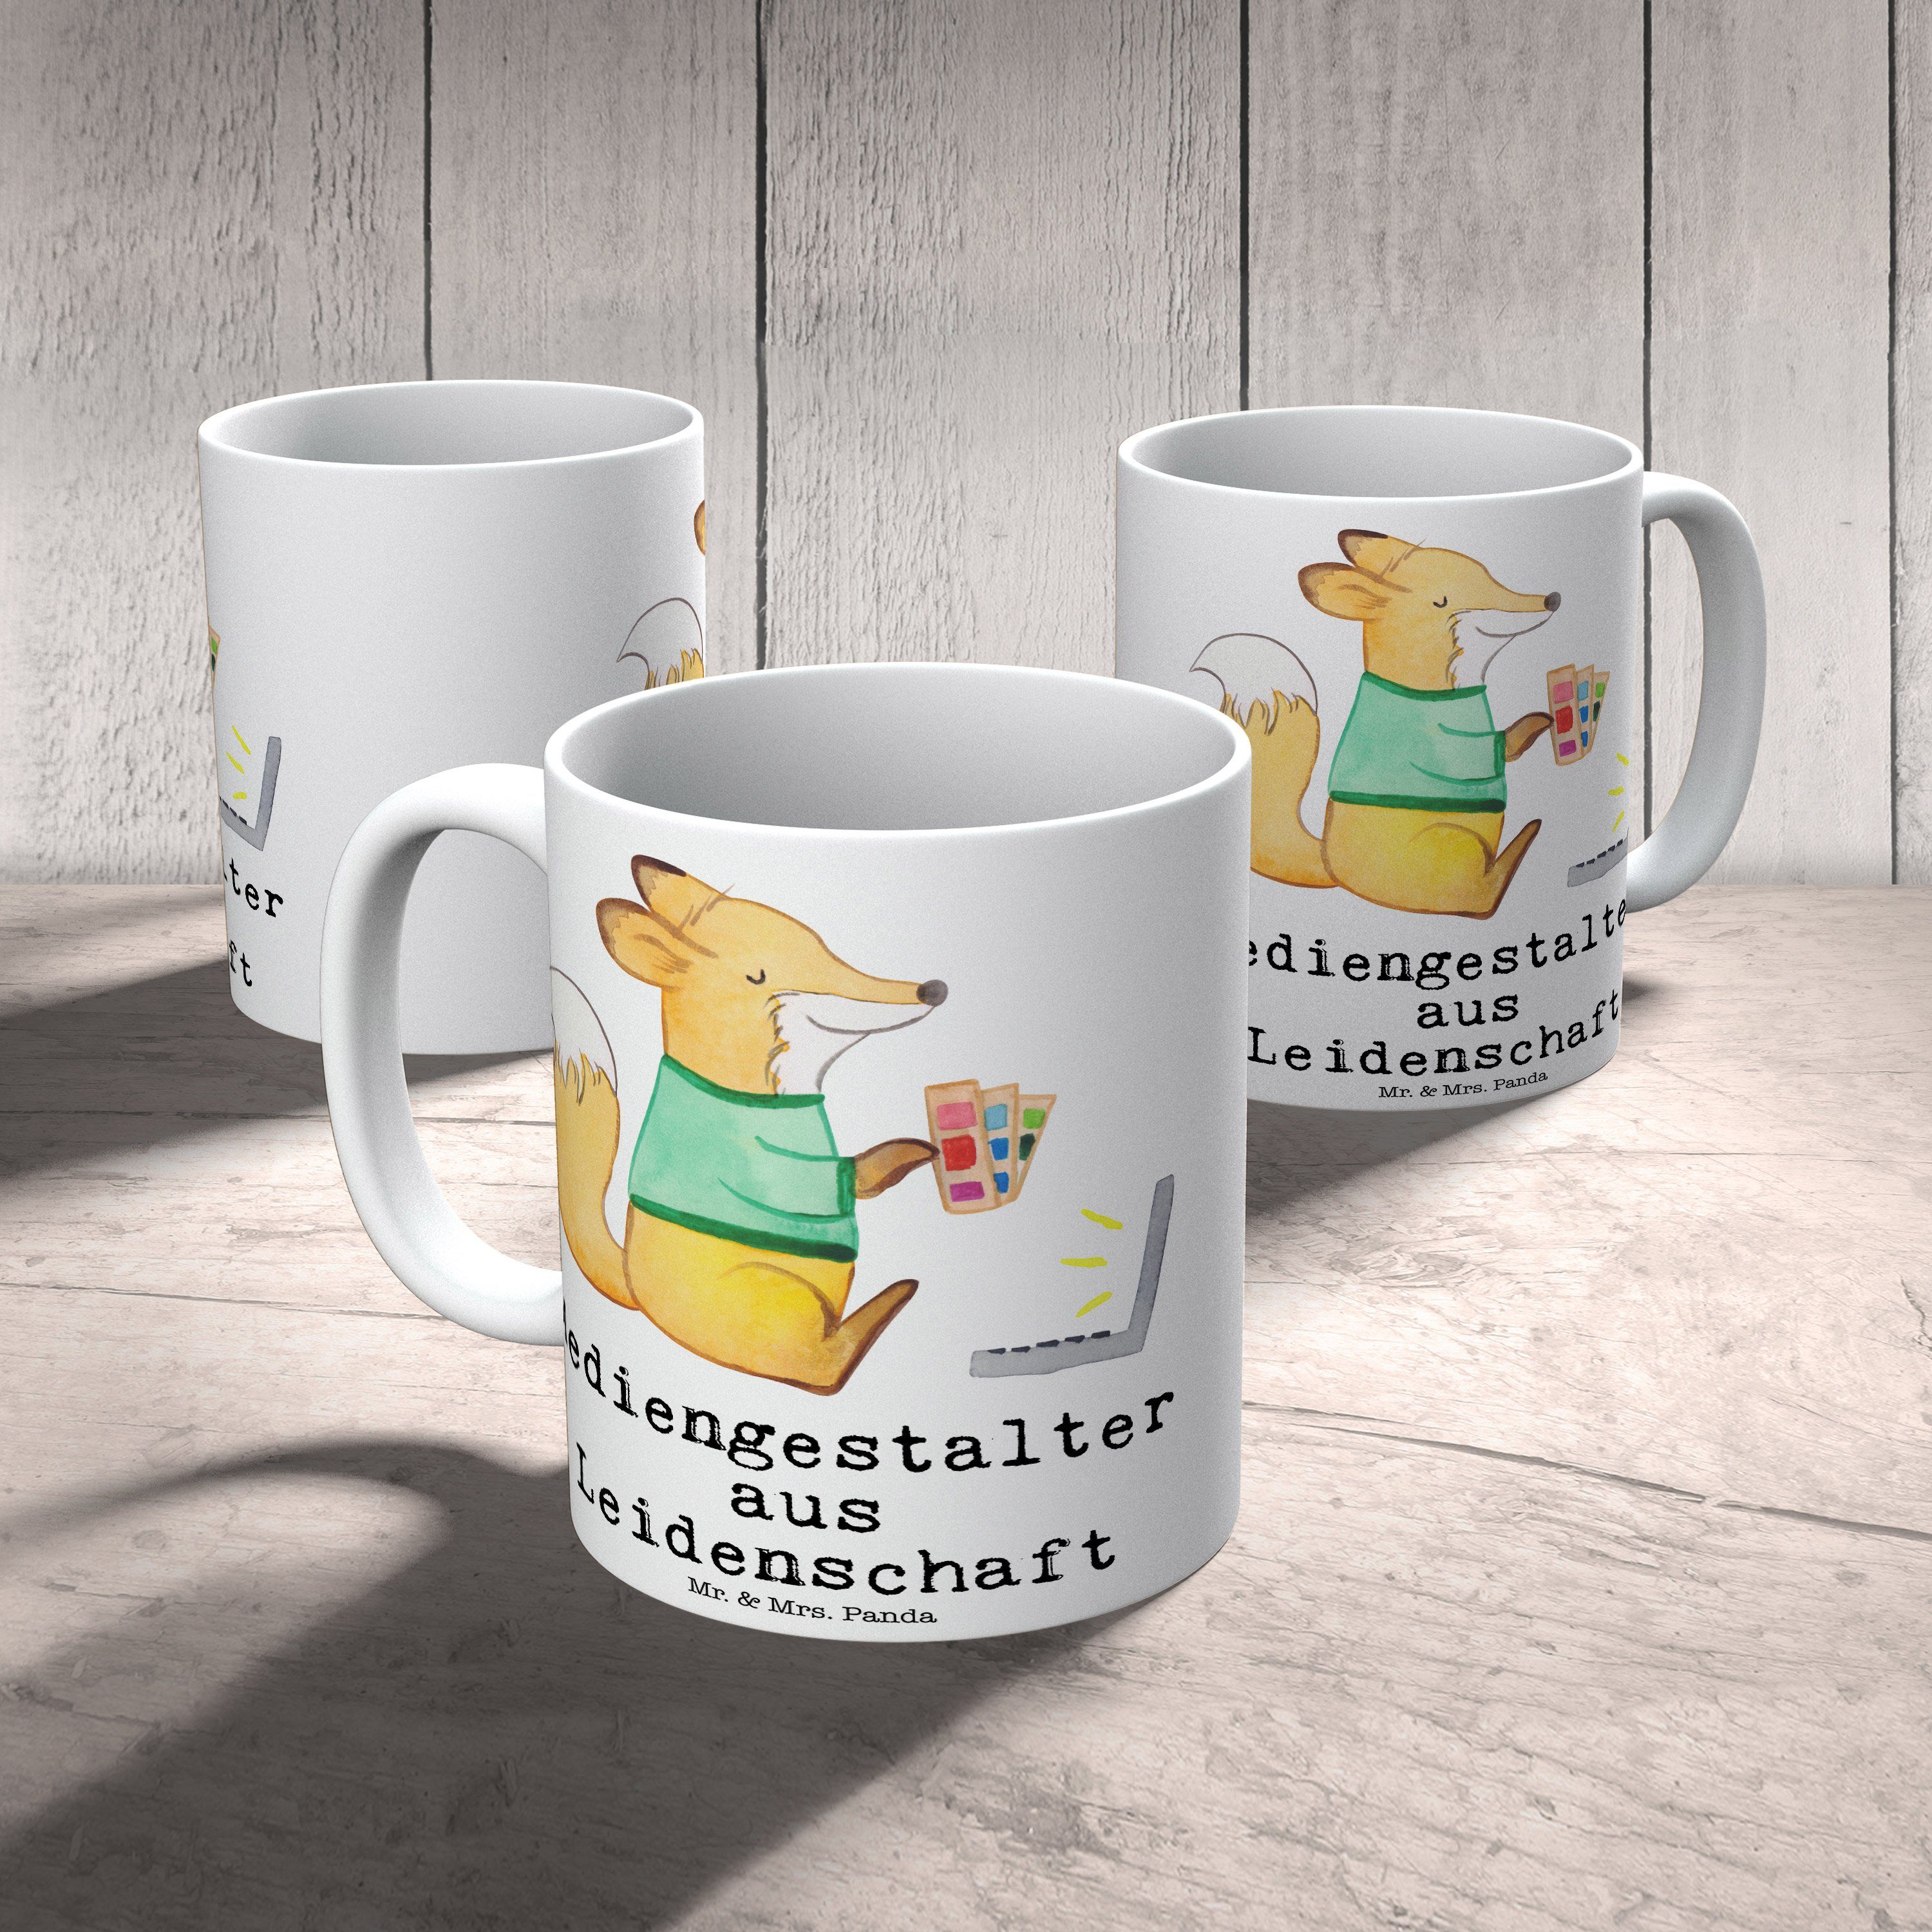 Mr. & Mrs. Weiß - Panda Dankes, Tasse Mediengestalter - Leidenschaft Teebecher, aus Keramik Geschenk